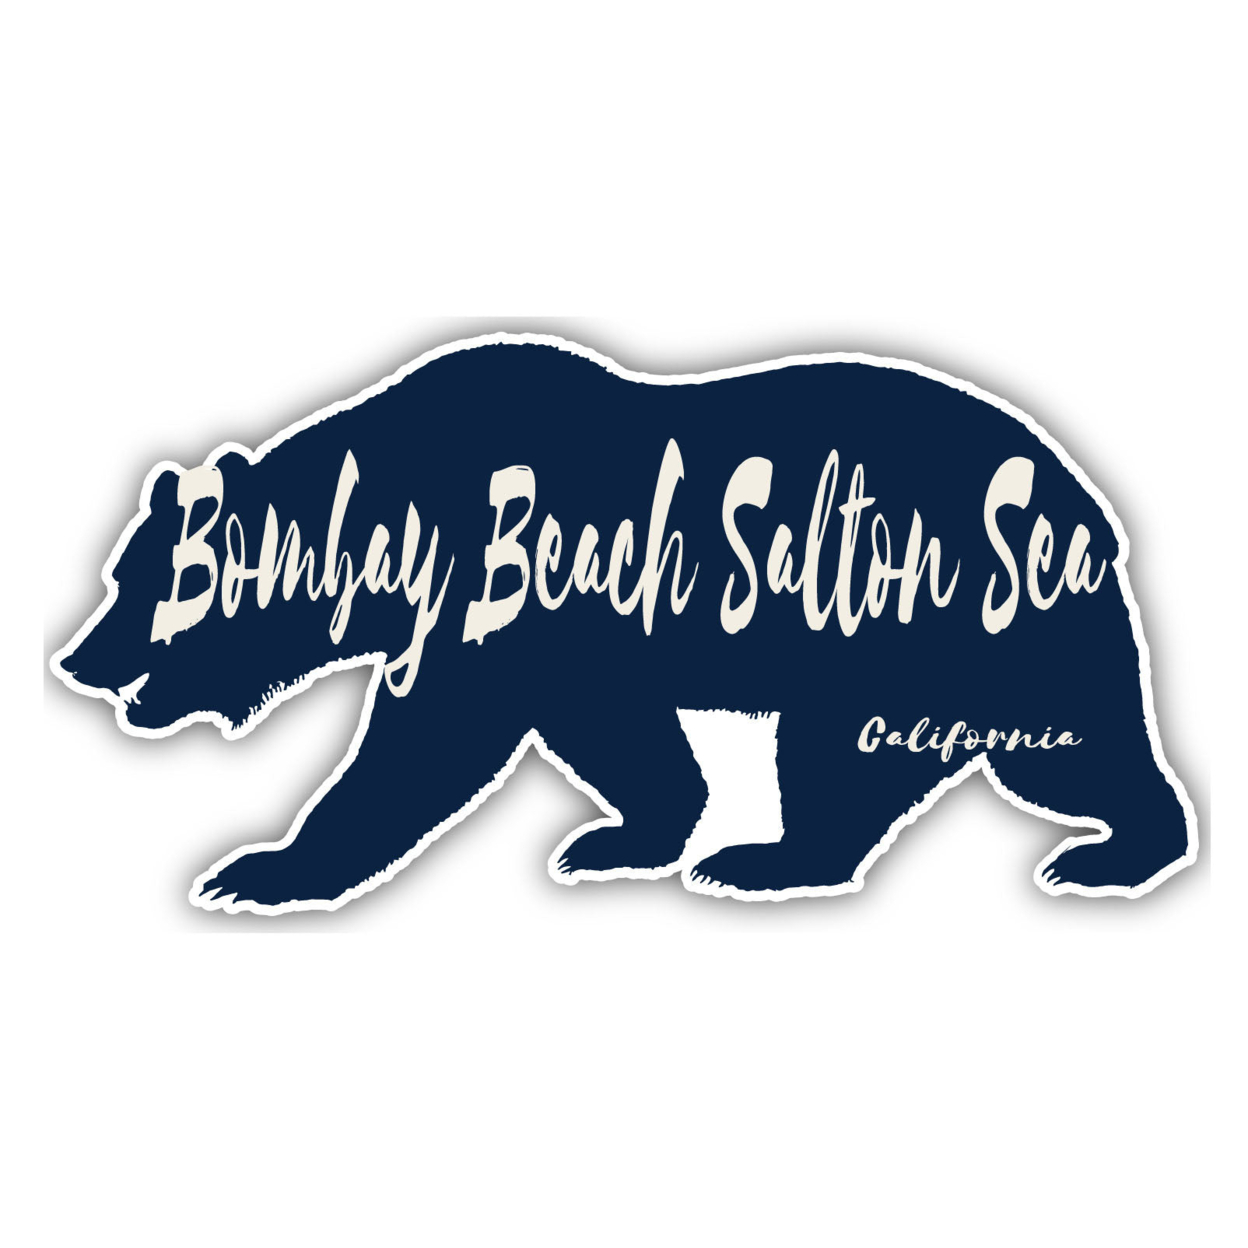 Bombay Beach Salton Sea California Souvenir Decorative Stickers (Choose Theme And Size) - Single Unit, 12-Inch, Bear